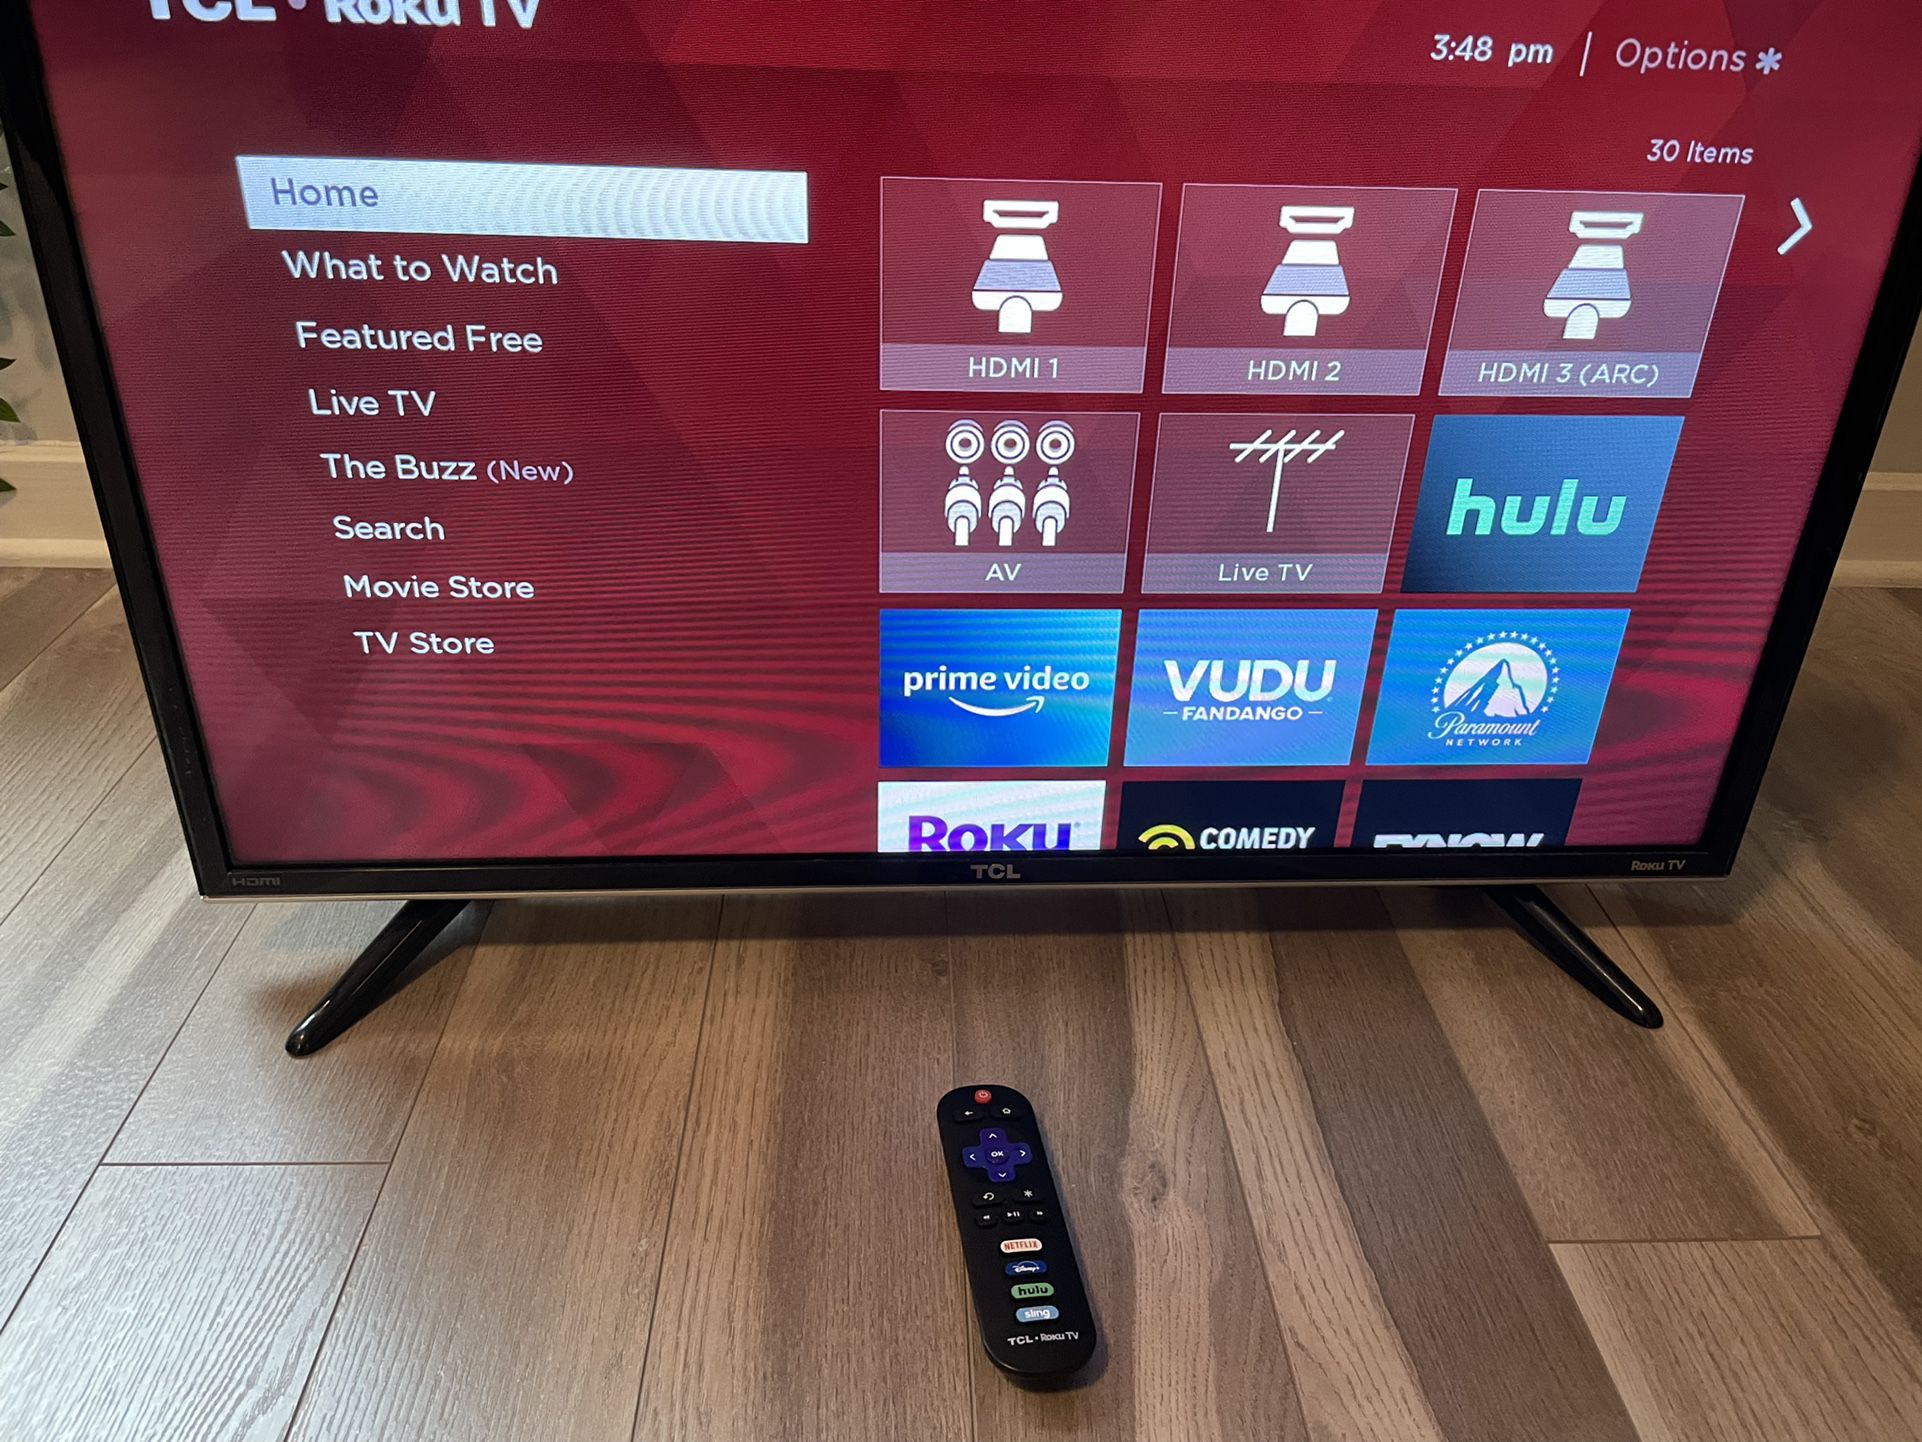 Roku TCL 32 Inch “ Smart TV